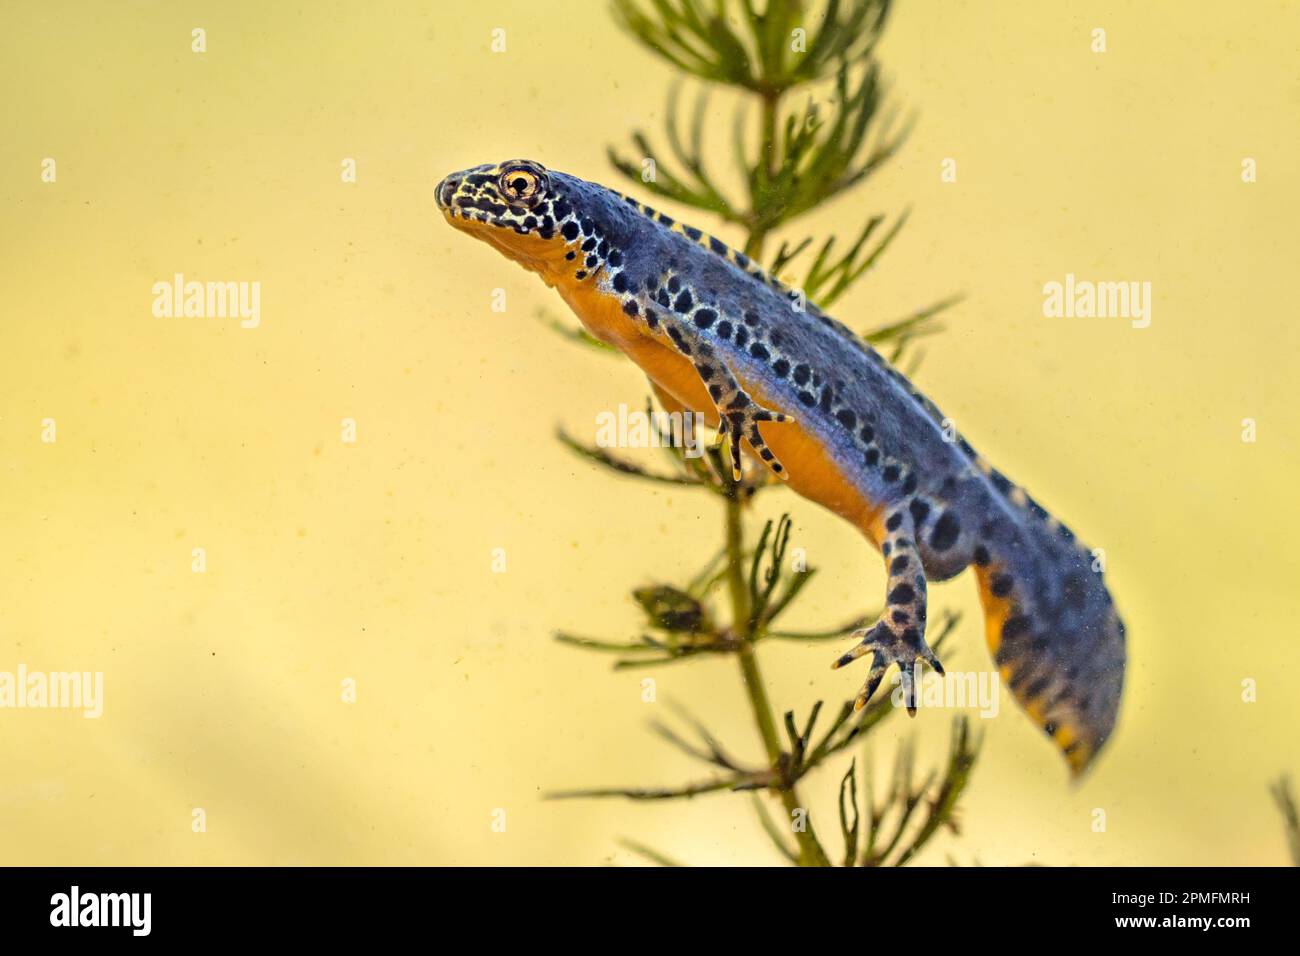 Alpine newt (Ichthyosaura alpestris) colorful male aquatic amphibian swimming in freshwater habitat of pond. Underwater wildlife scene of animal in na Stock Photo